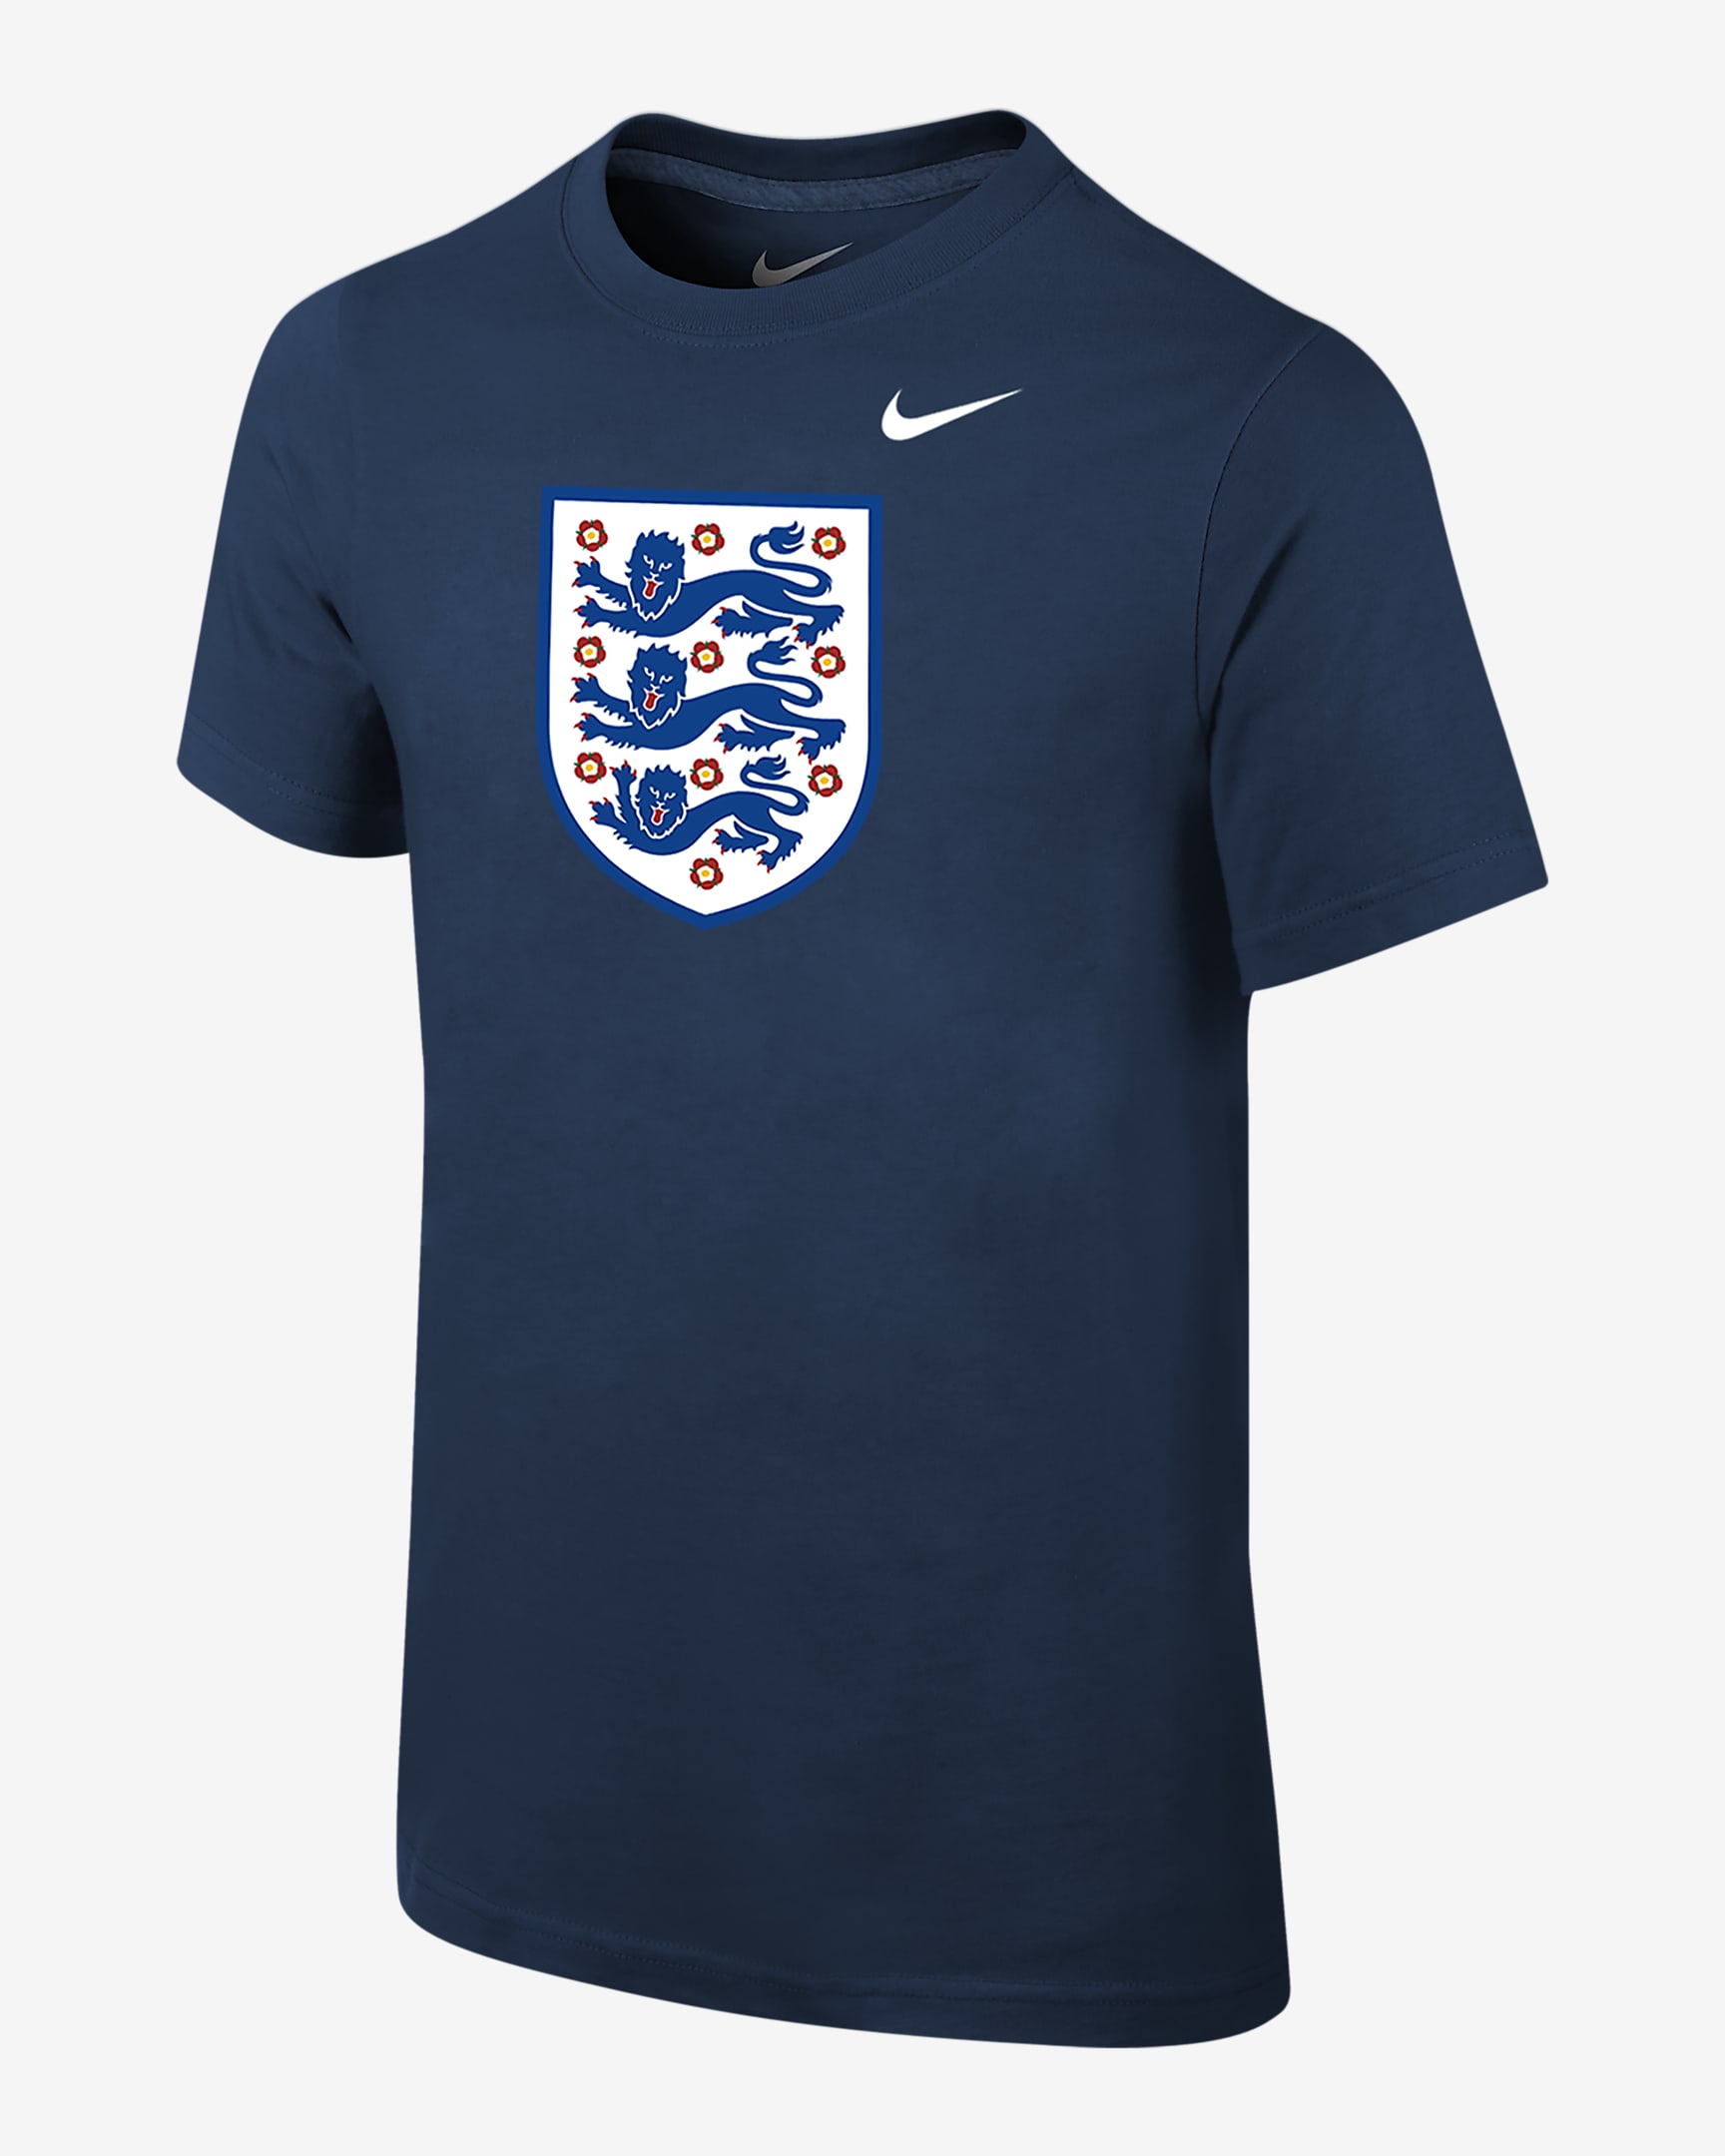 Playera Nike Core para niños talla grande de Inglaterra. Nike.com